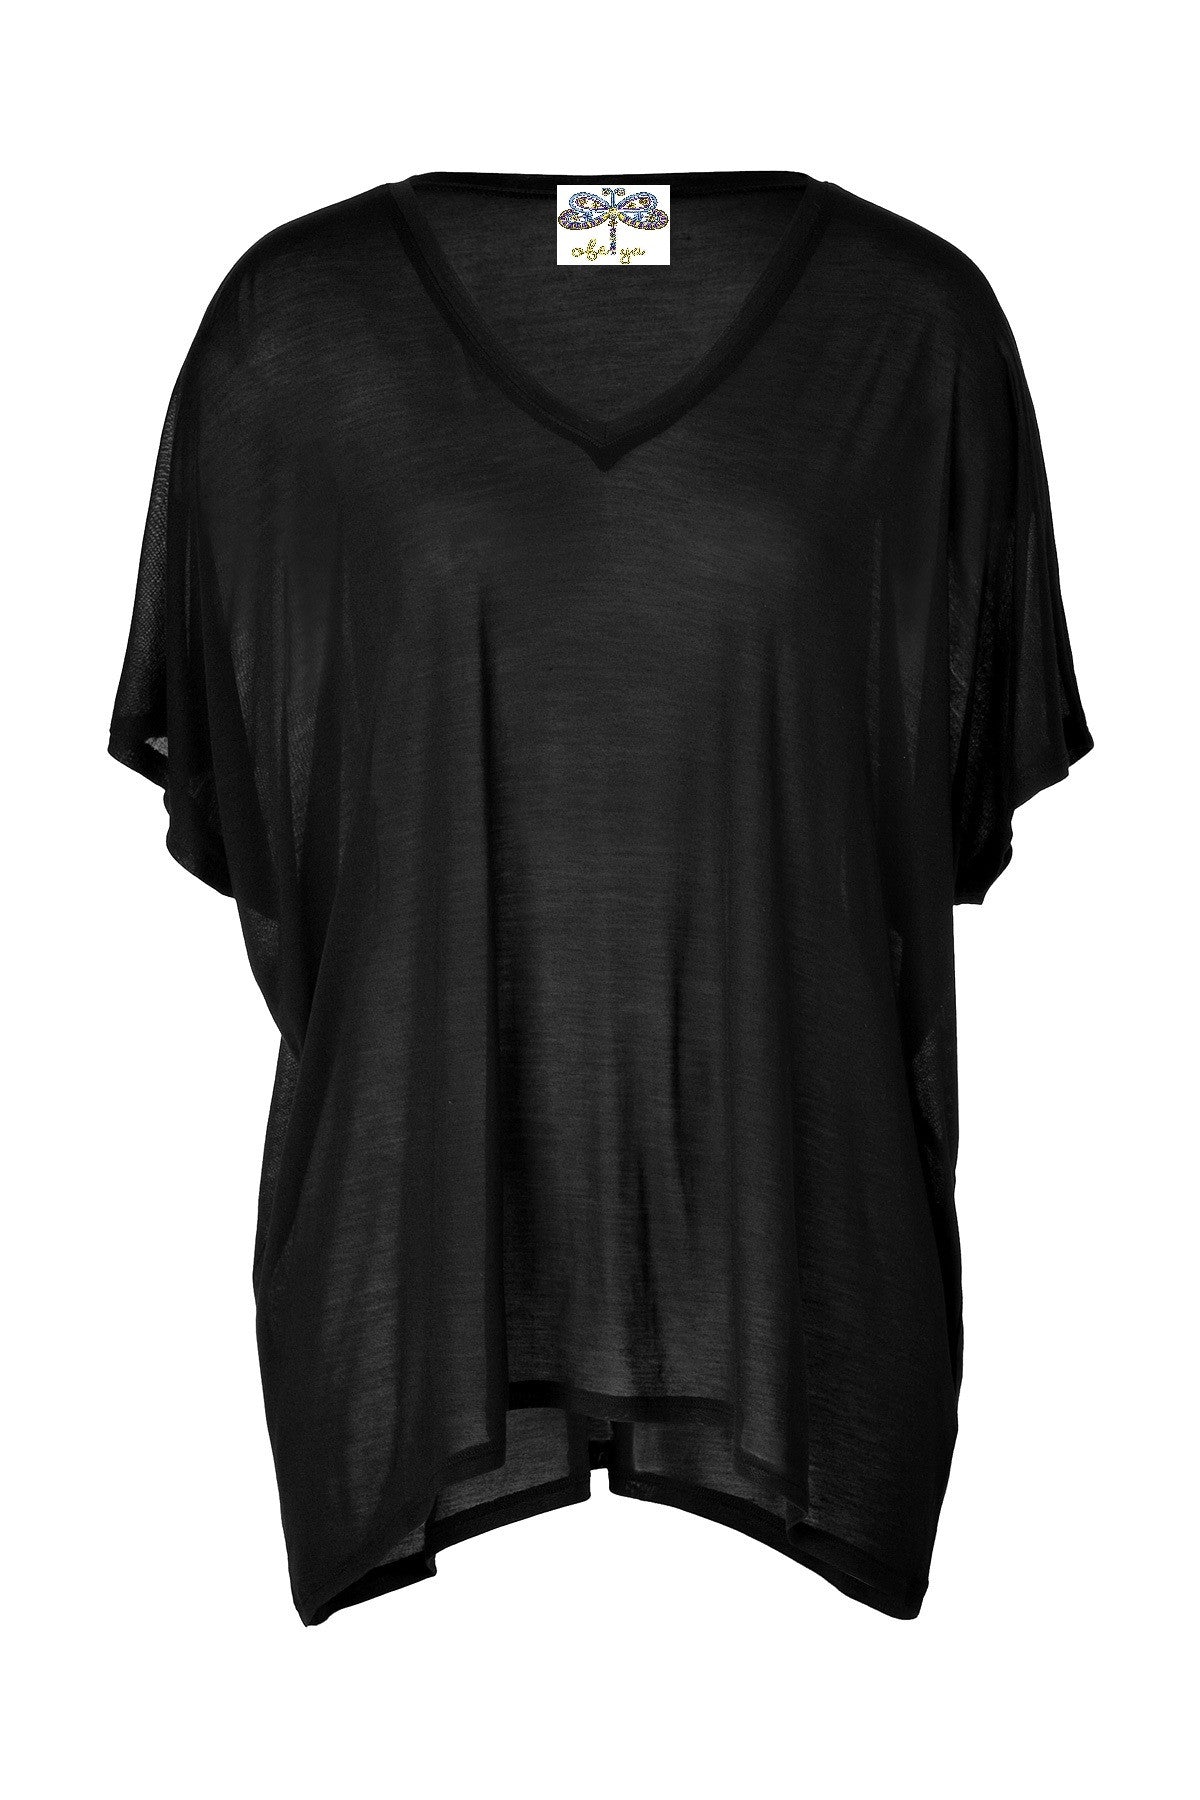 Basic Jersey Oversized T-Shirt in White & Black Asymmetric Cut for Women